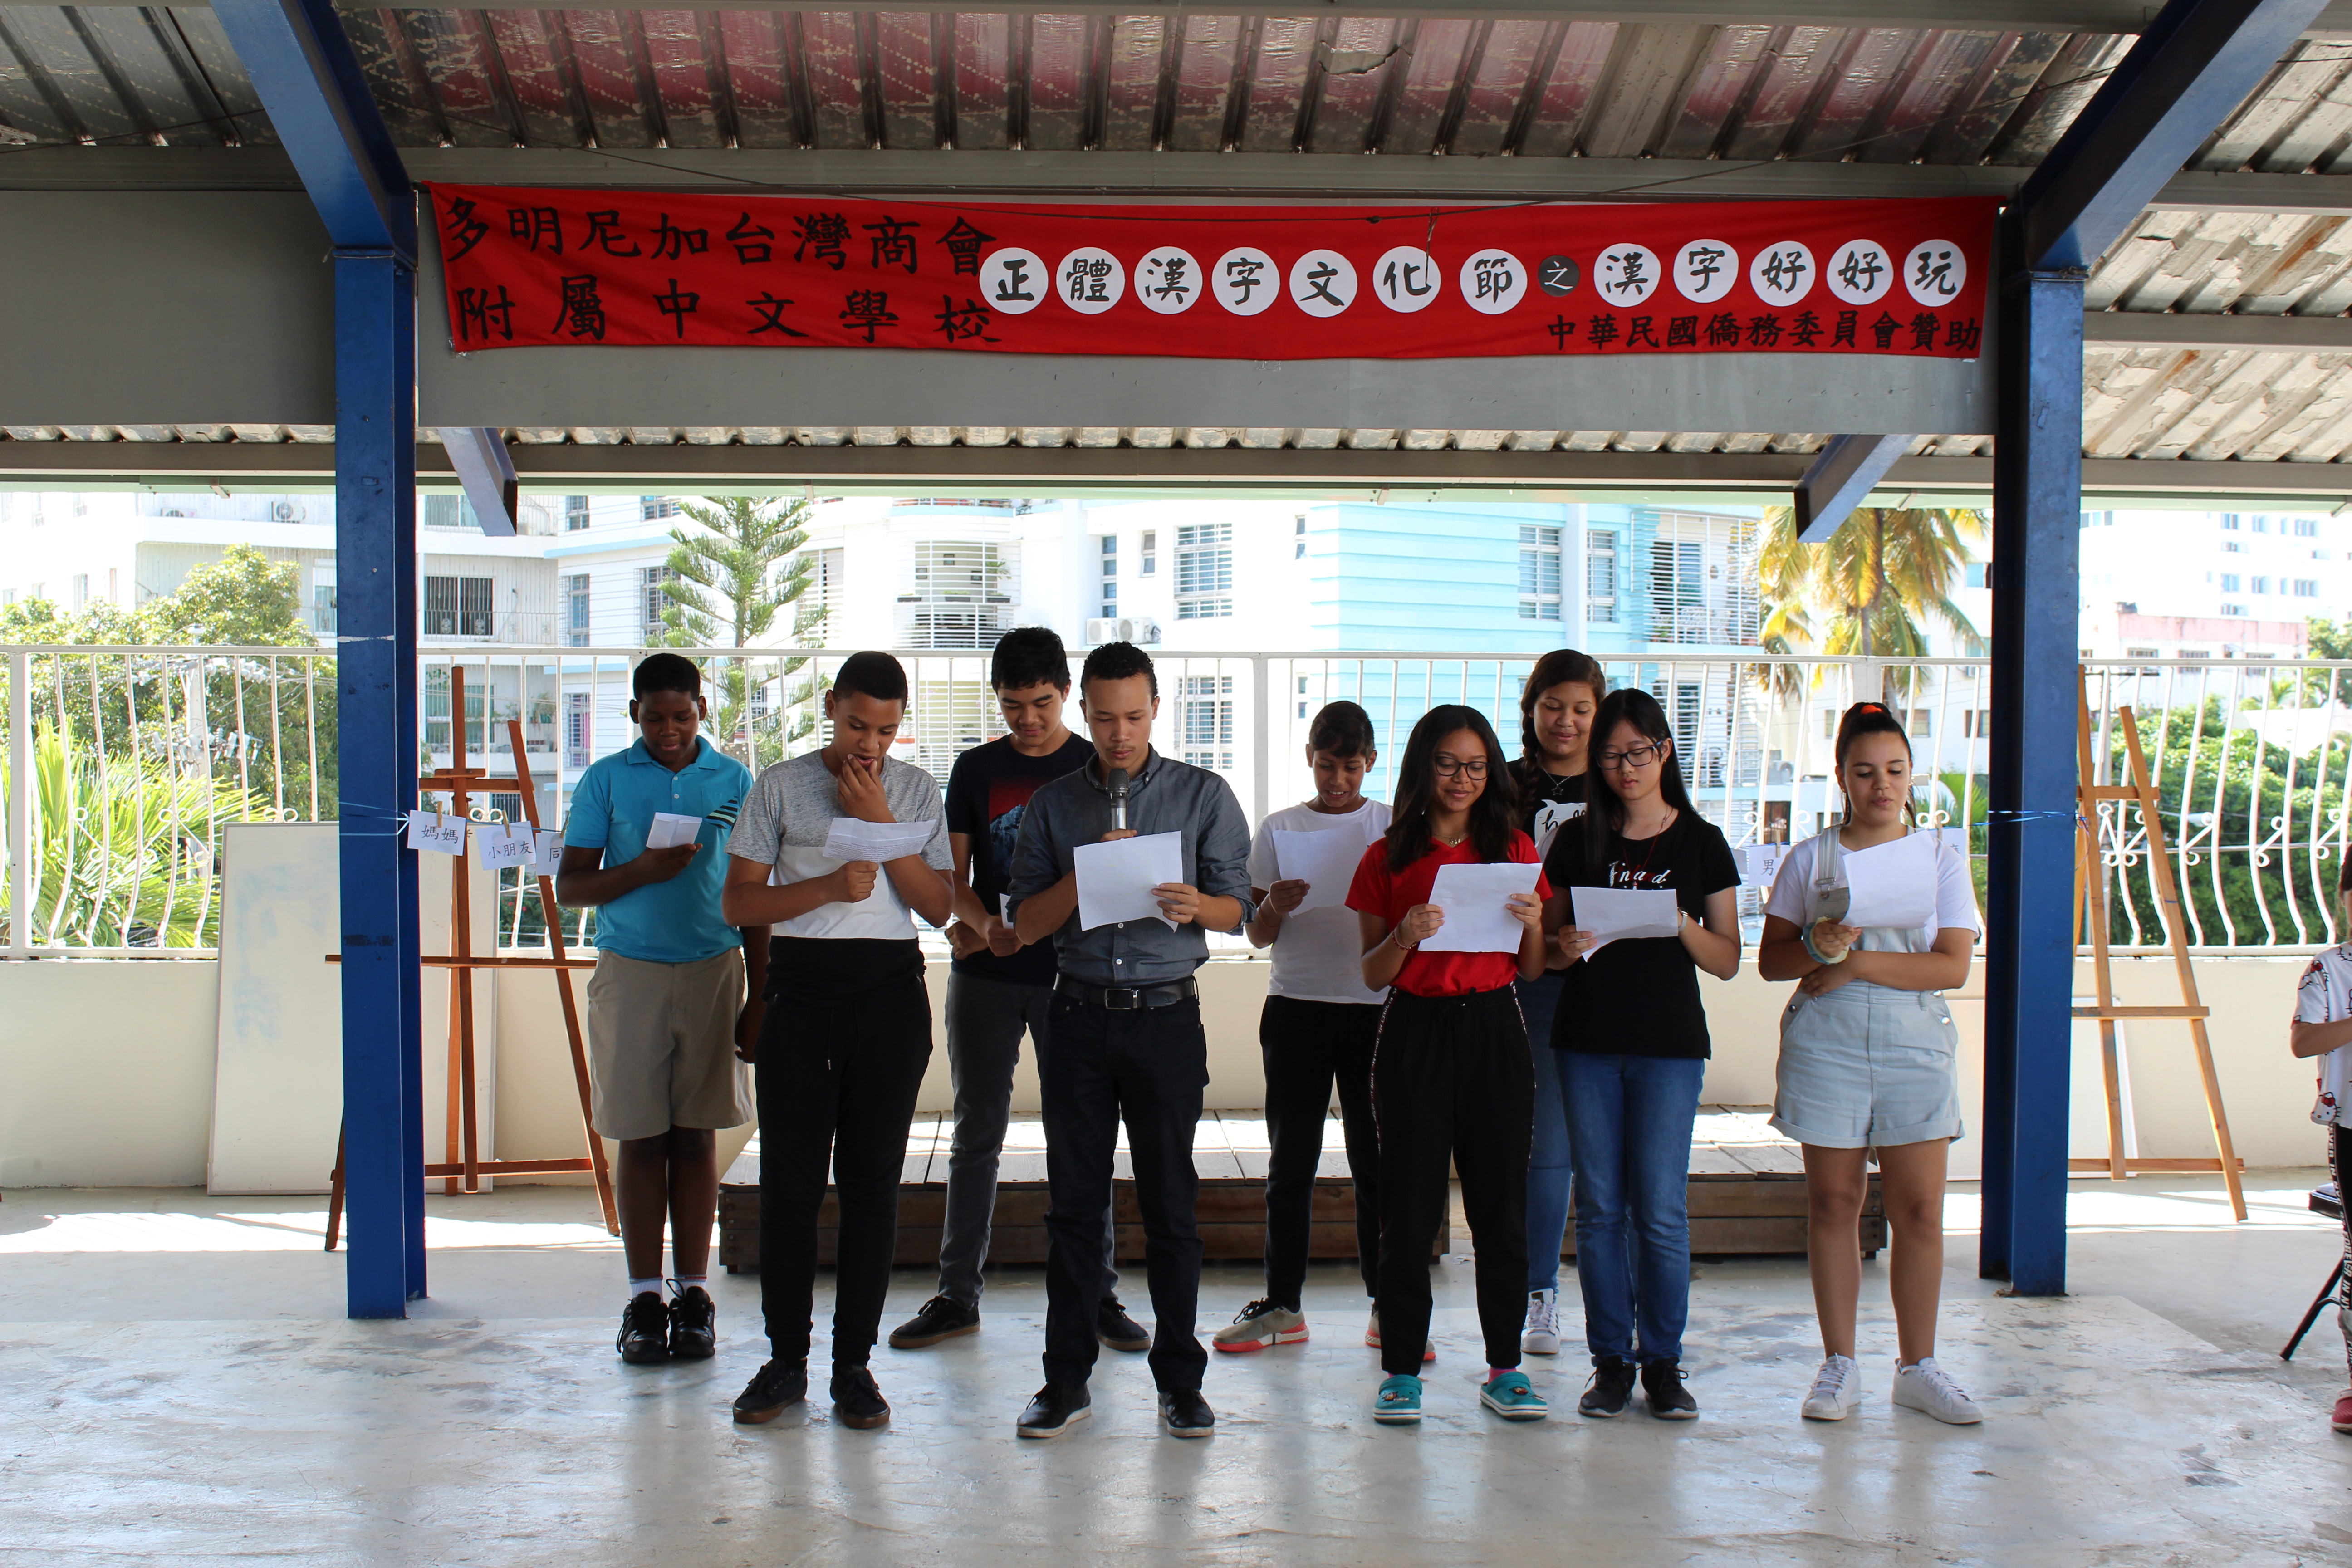 以當地學生為主的二級學生演唱「但願人長久」的中文歌曲。El grupo de estudiantes dominicanos cantan la canción famosa en chino mandarin.